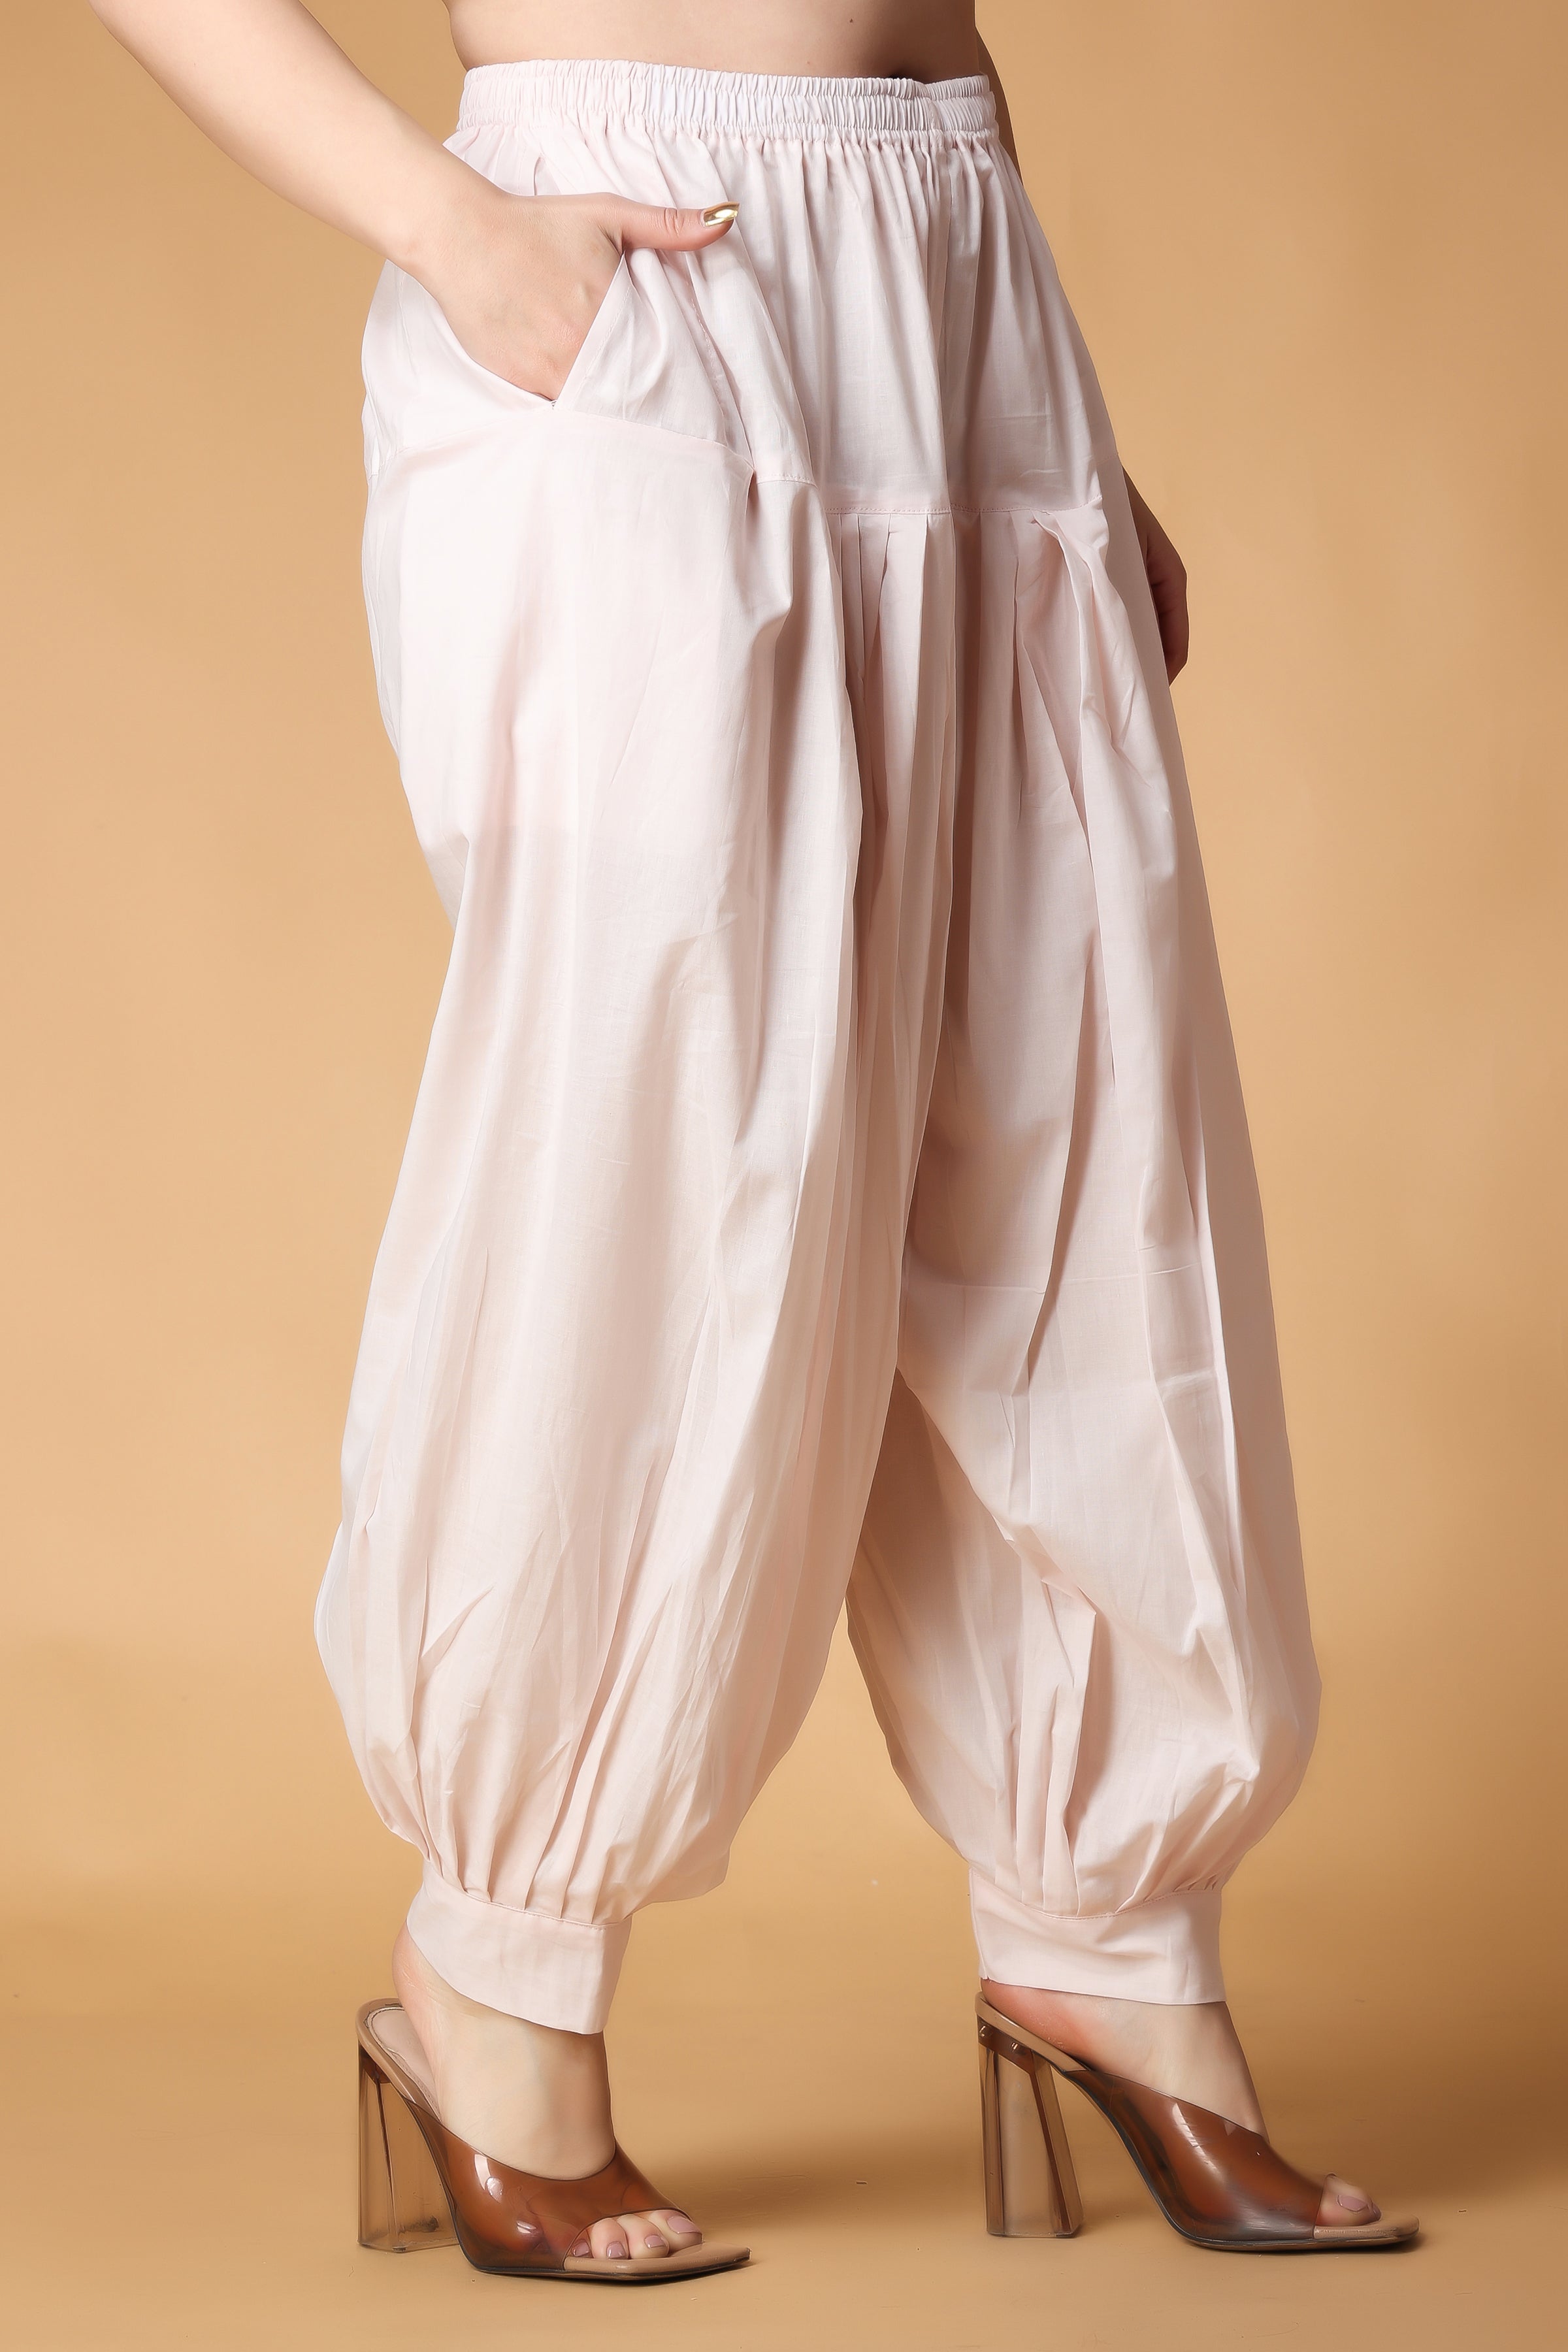 PINKVILLE JAIPUR Pants  Buy PINKVILLE JAIPUR White Afghani Style Pants  Online  Nykaa Fashion